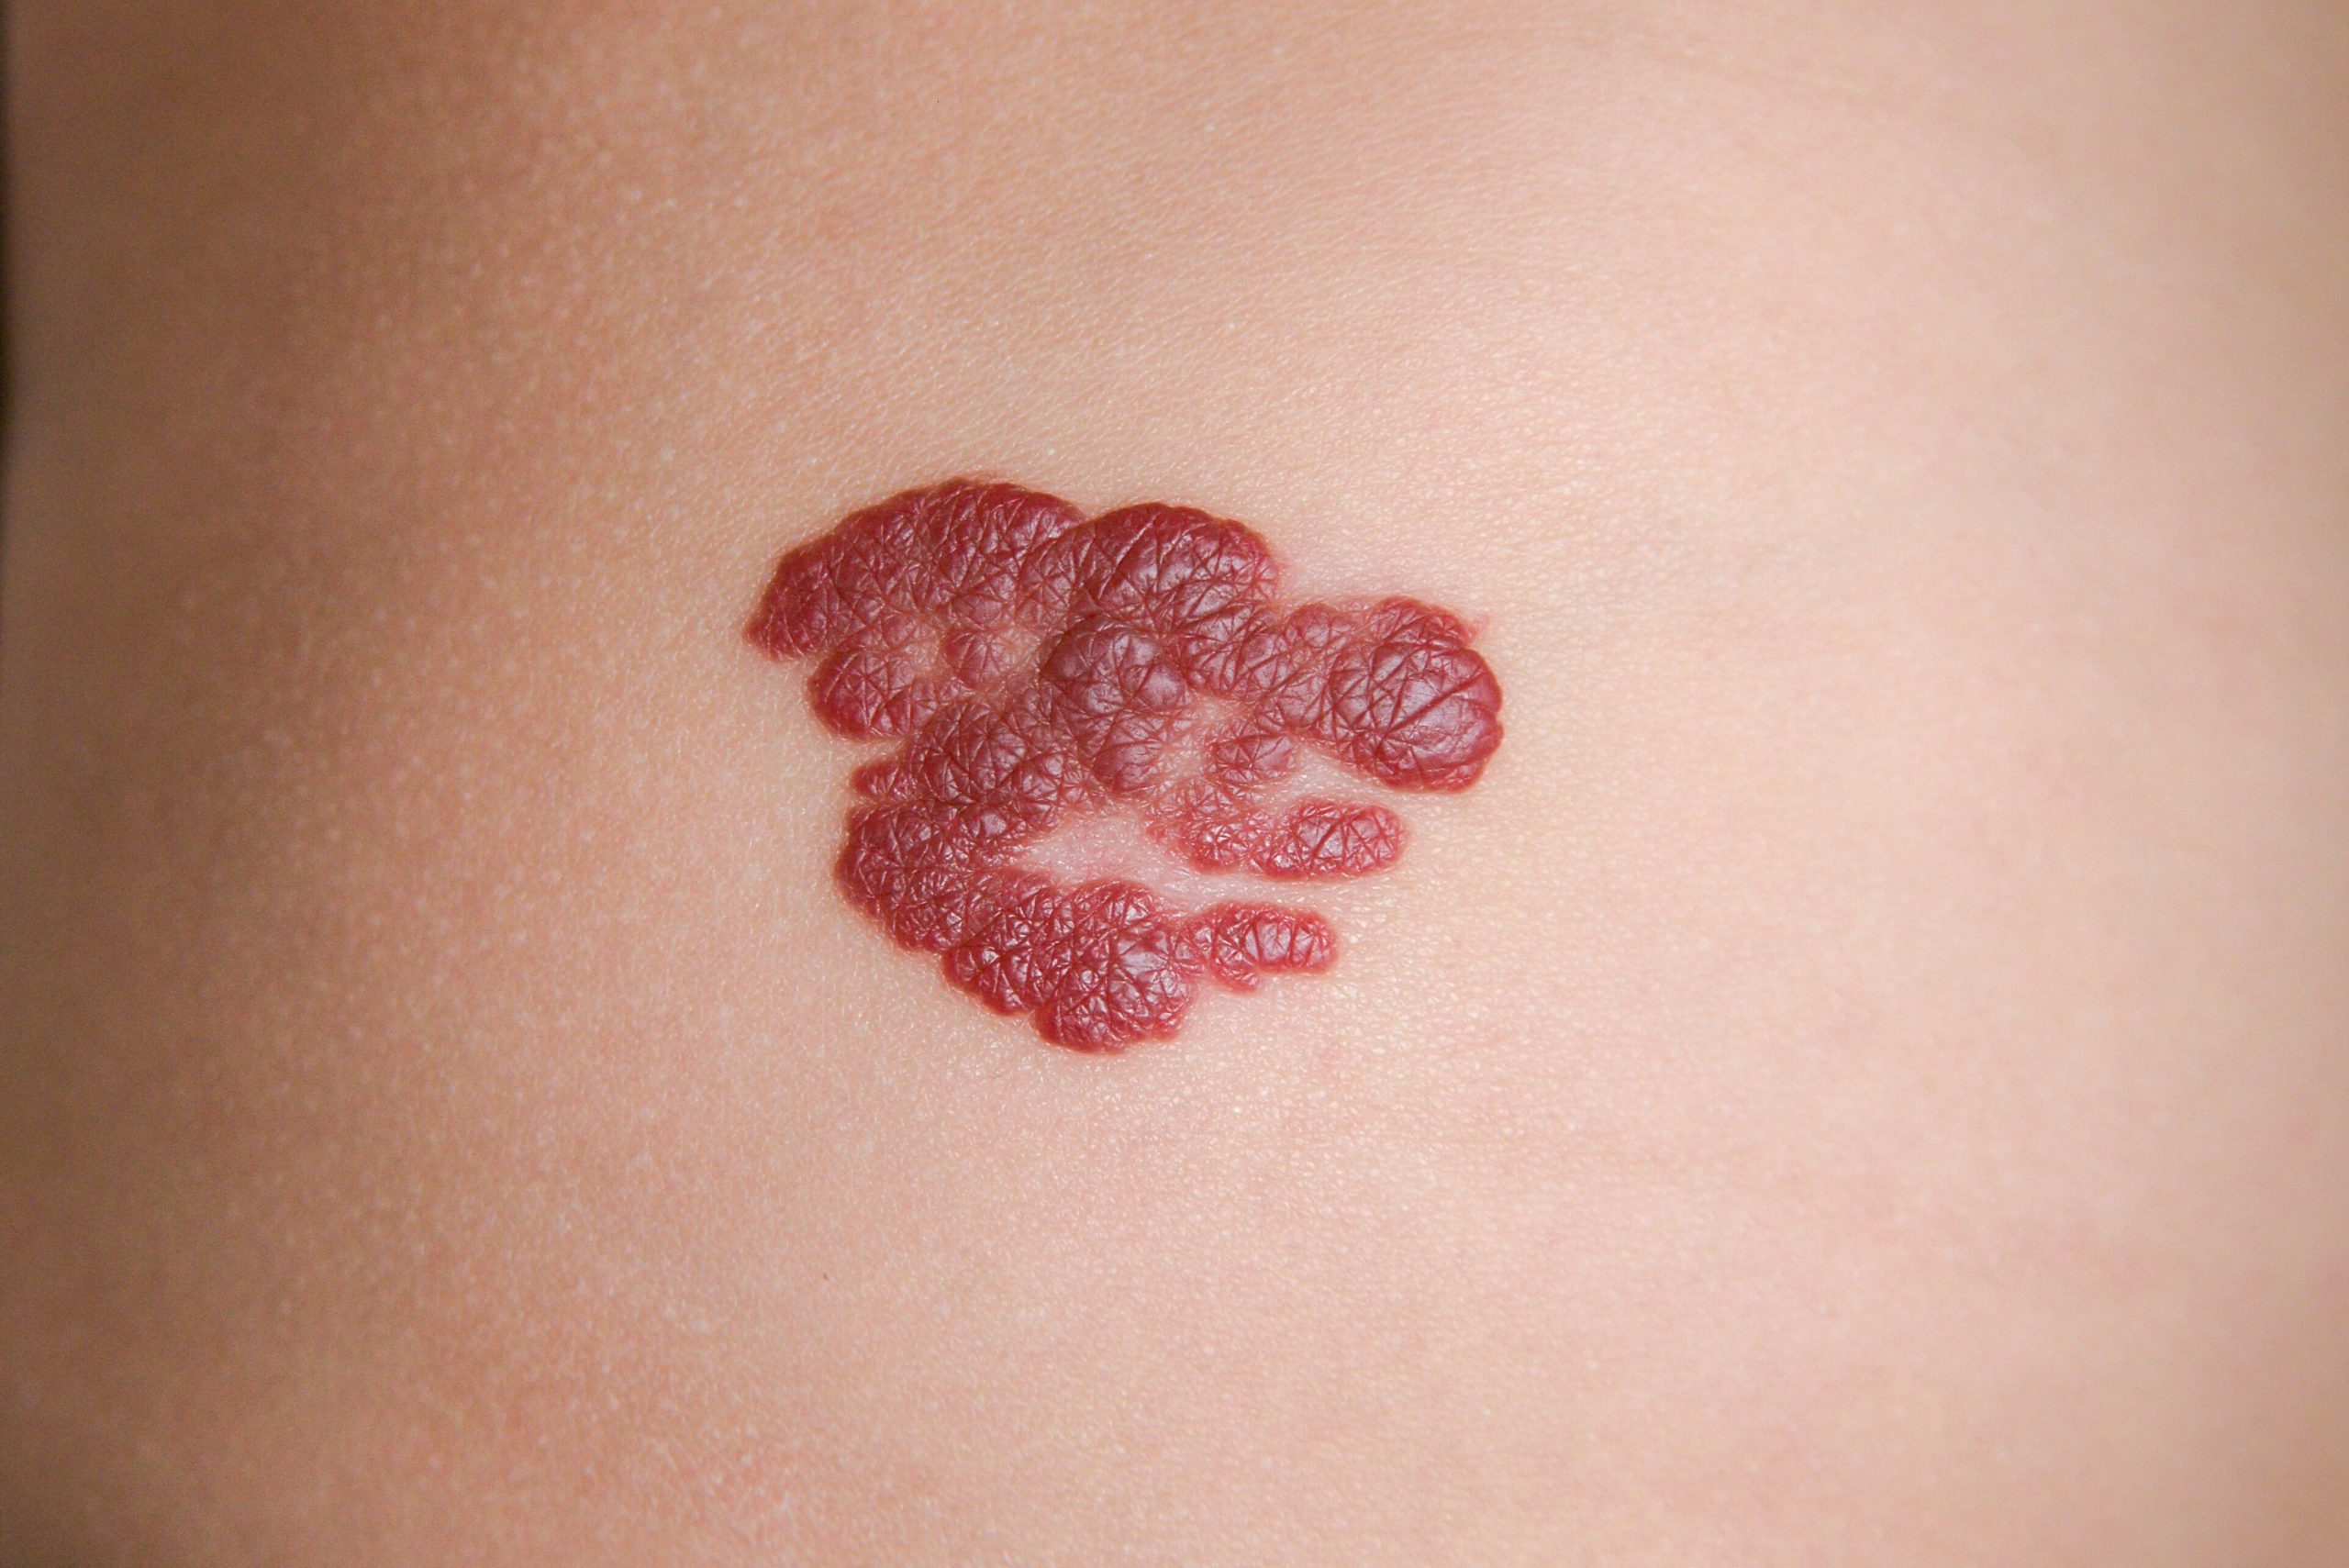 Infantile Hemangioma red birthmark (also called strawberry mark)